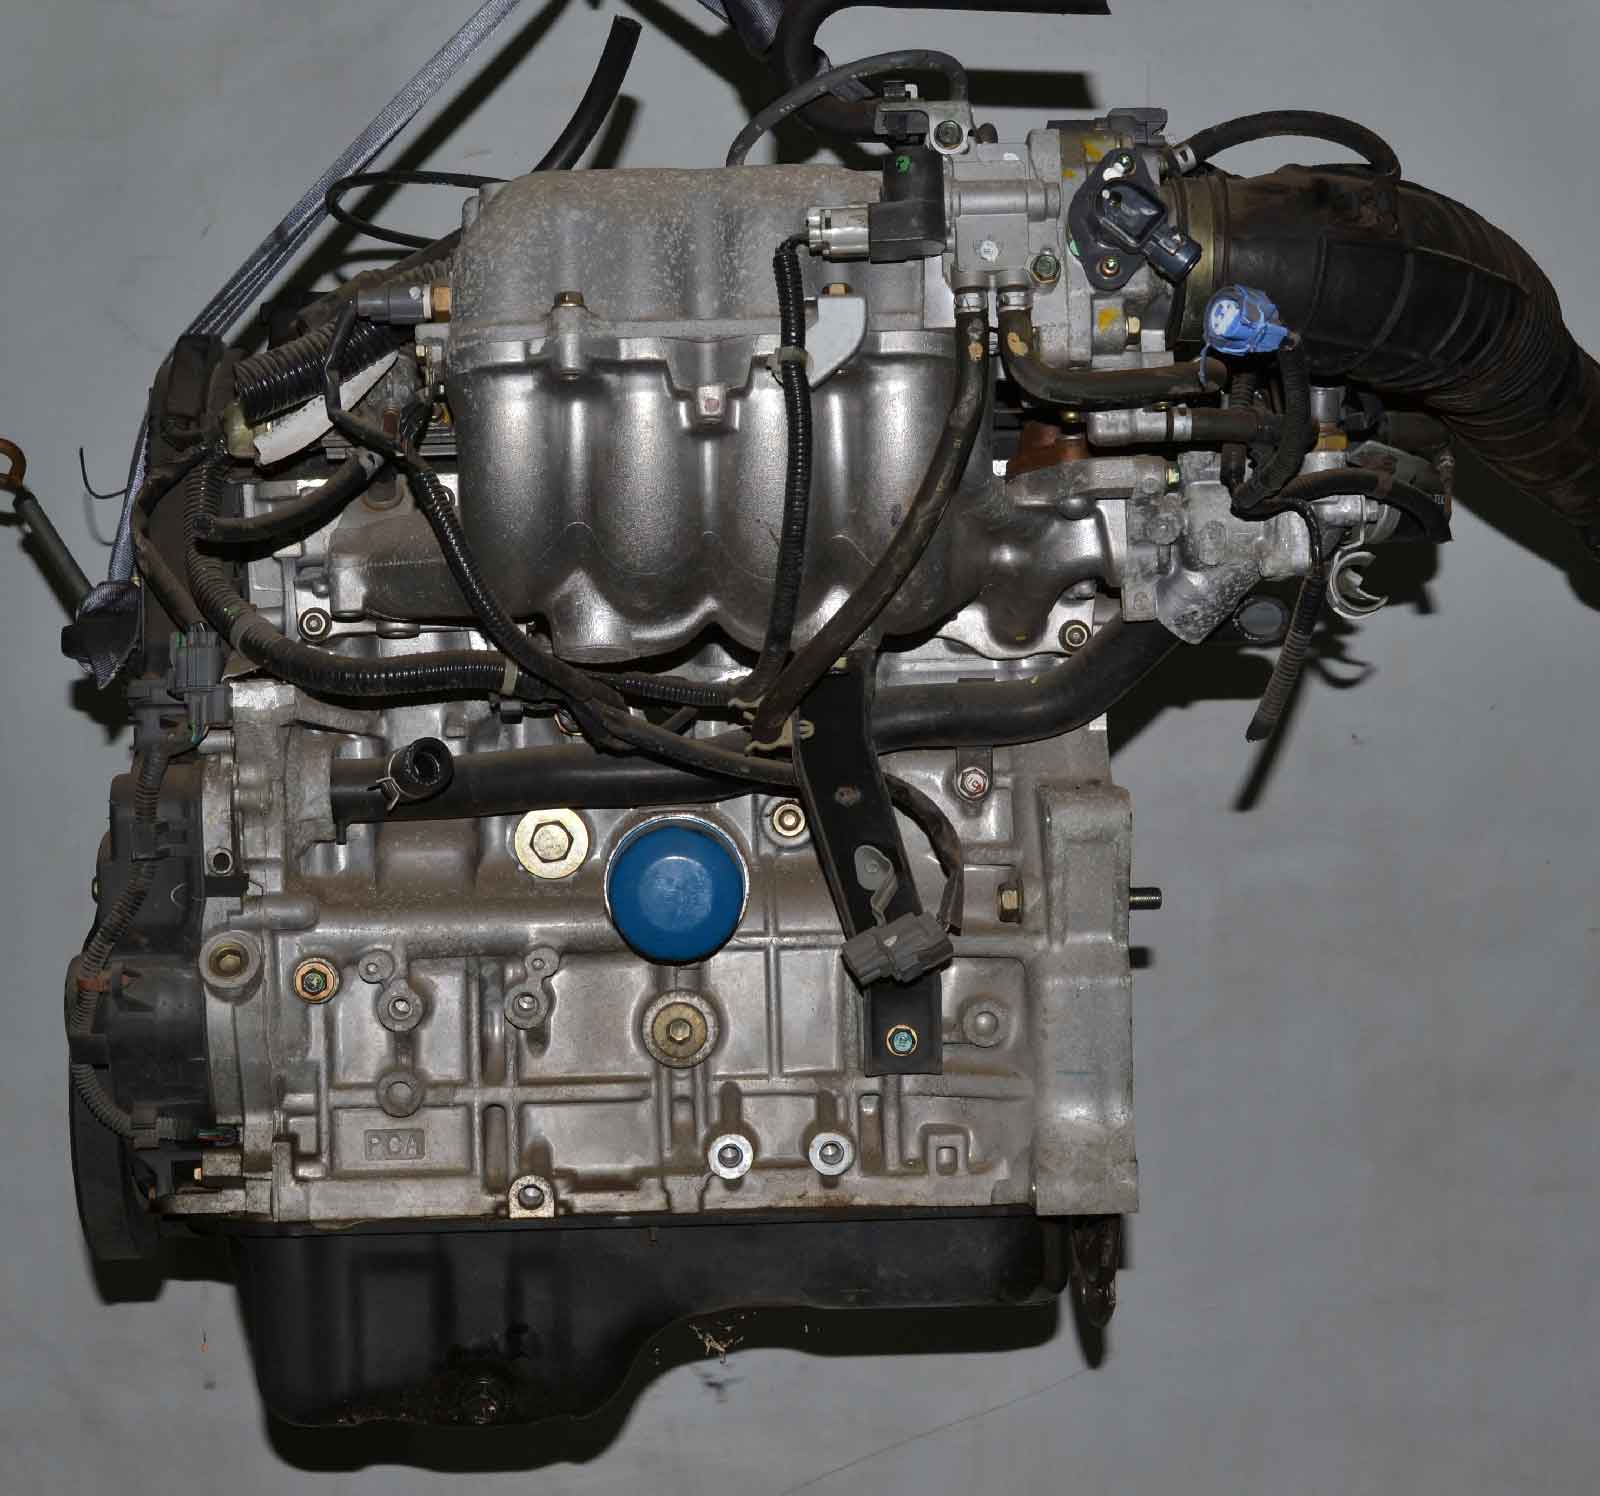 Двигатели b20a, b20b, b20z1 honda: характеристики, надежность - мотор инфо